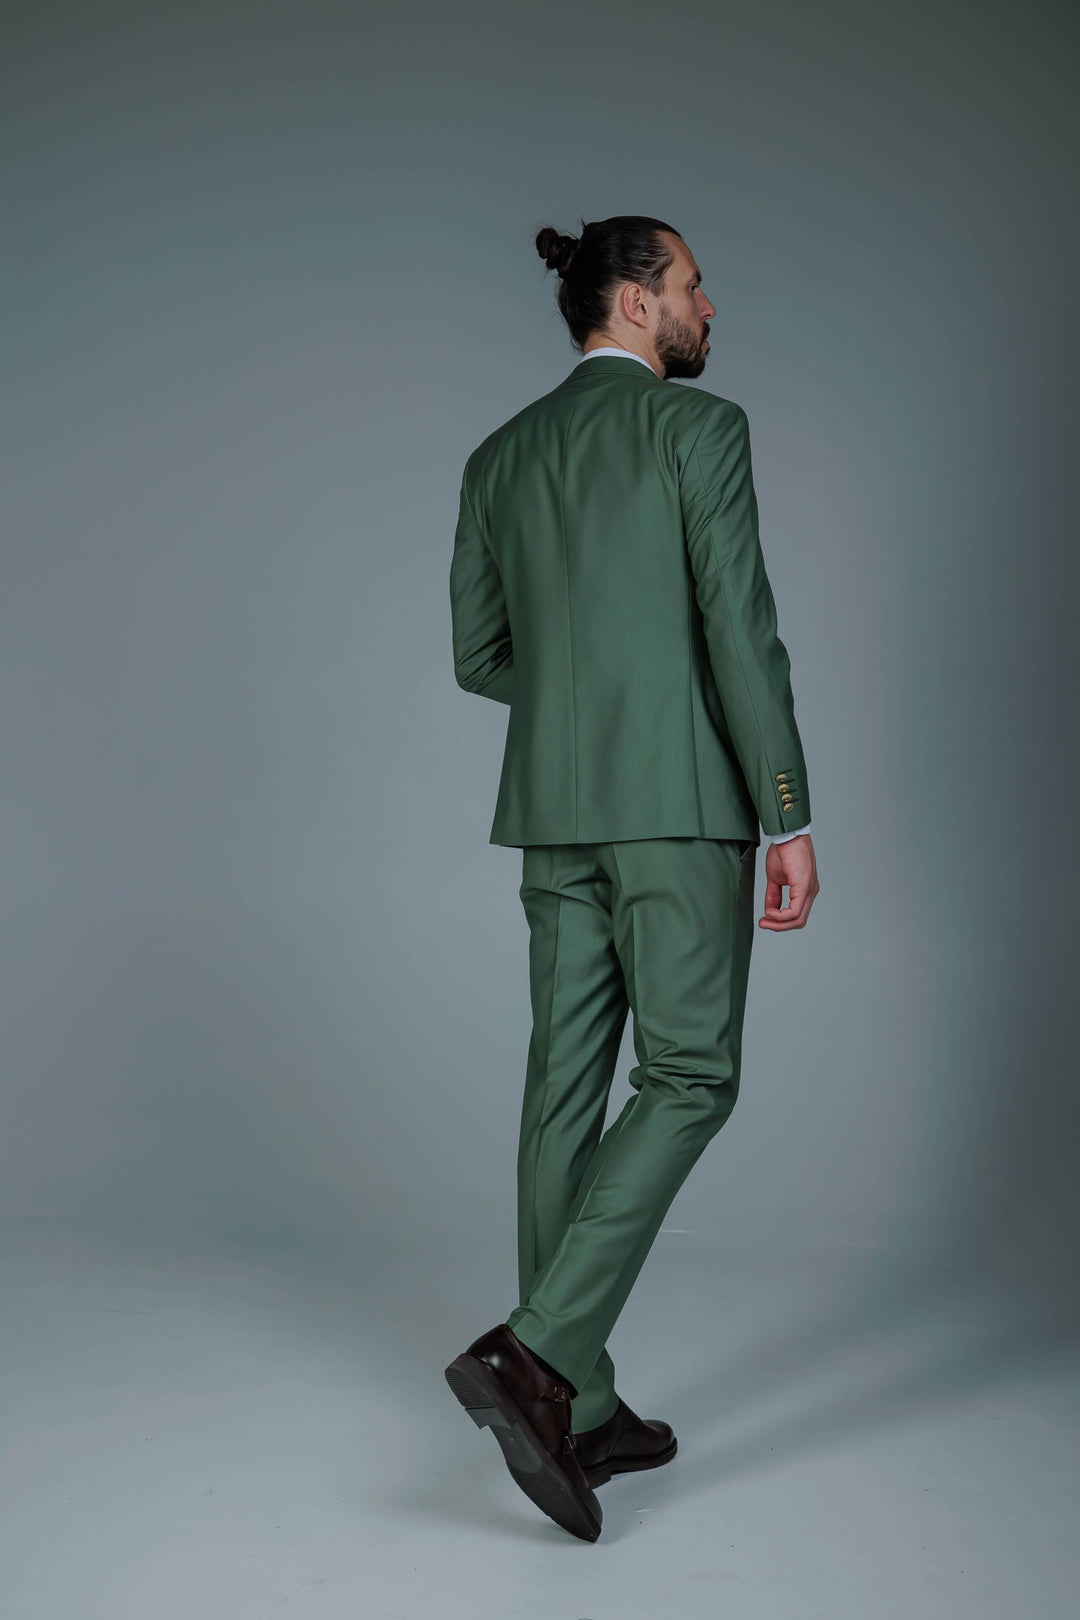 Three-piece light green suit